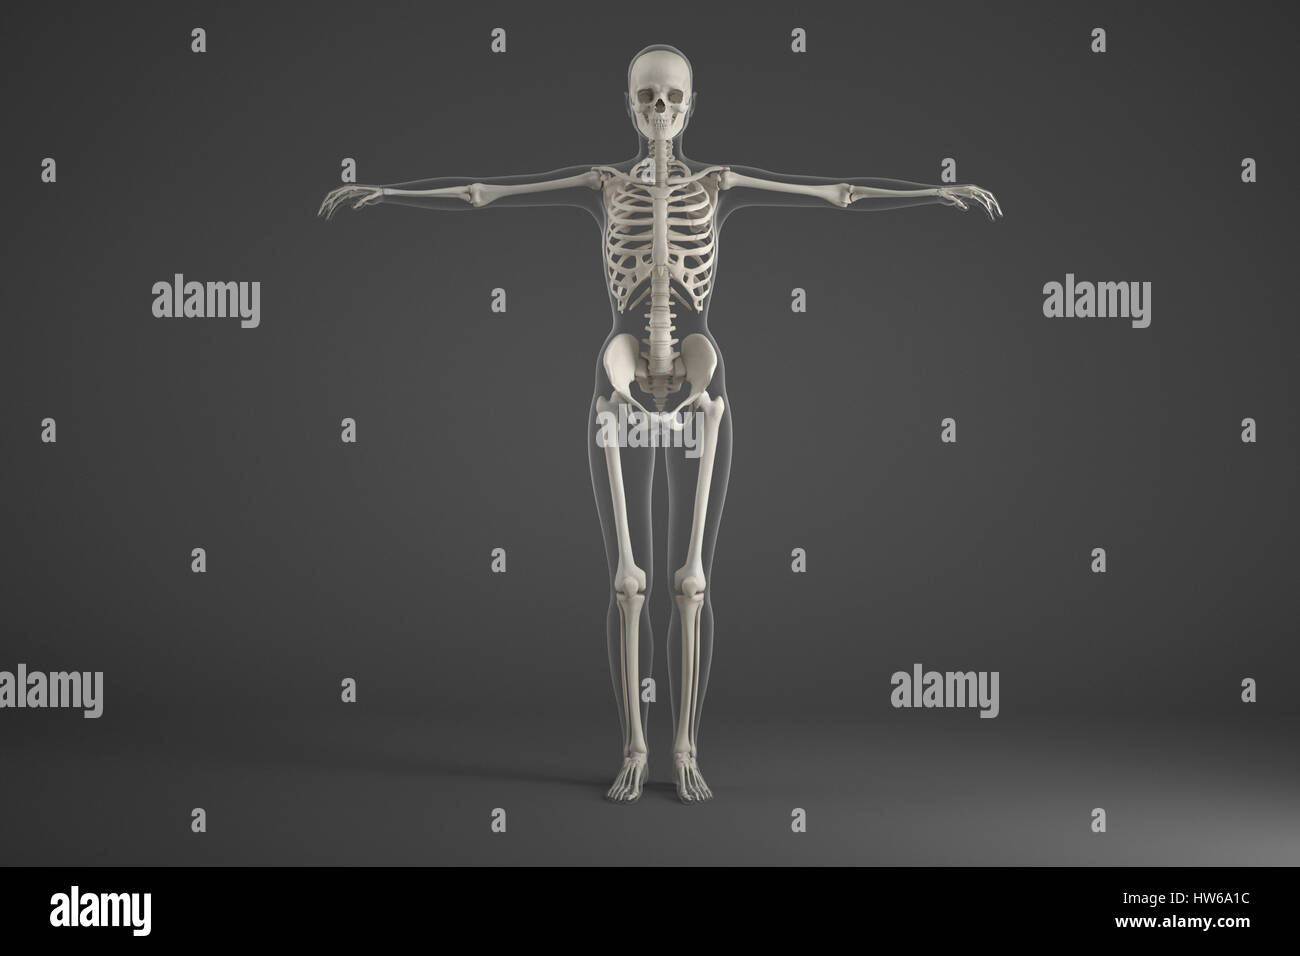 Human skeletal system, illustration. Stock Photo